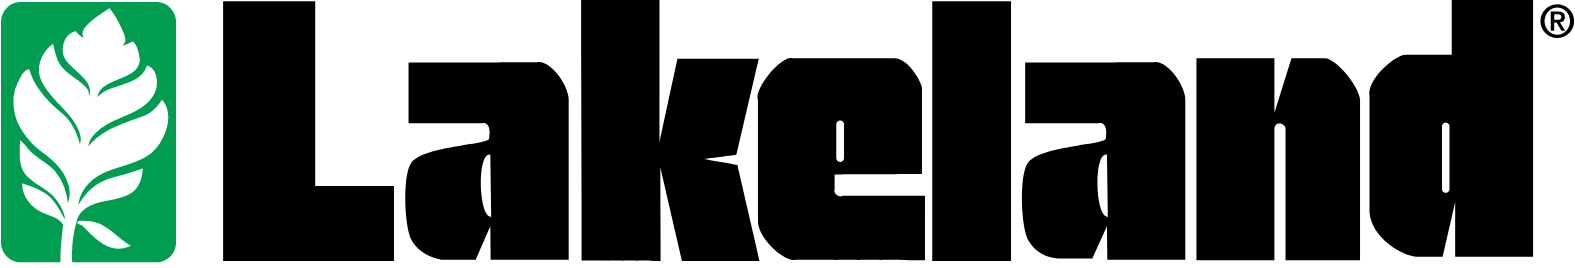 Lakeland Industries
 logo large (transparent PNG)